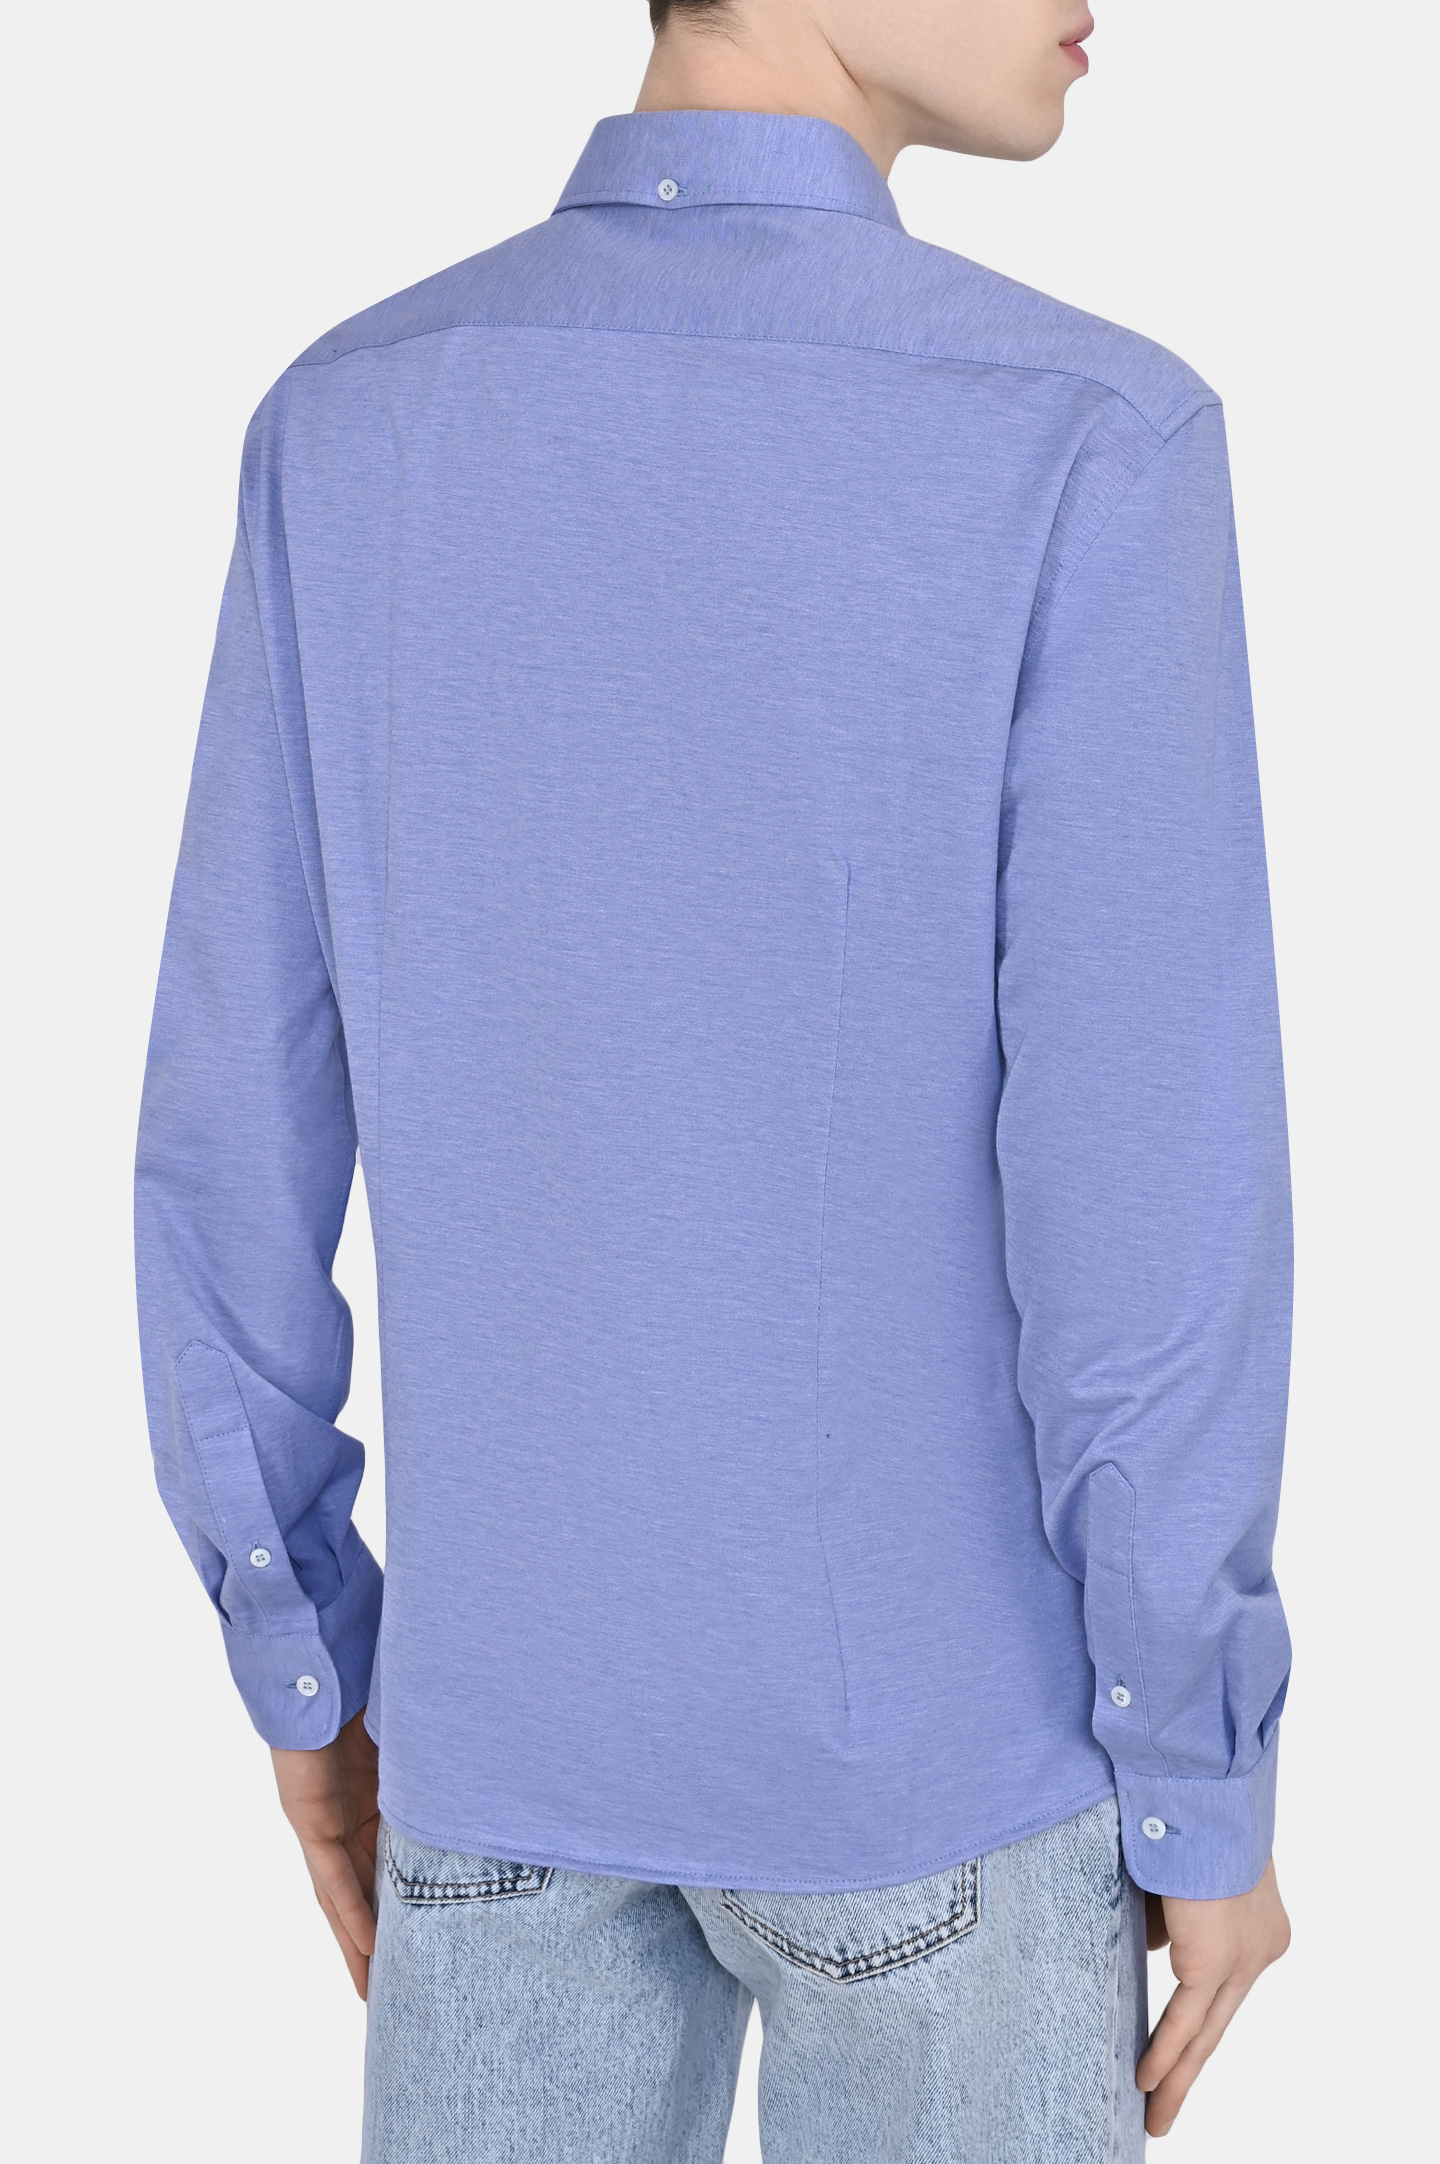 Рубашка BRUNELLO  CUCINELLI MTS406699, цвет: Голубой, Мужской